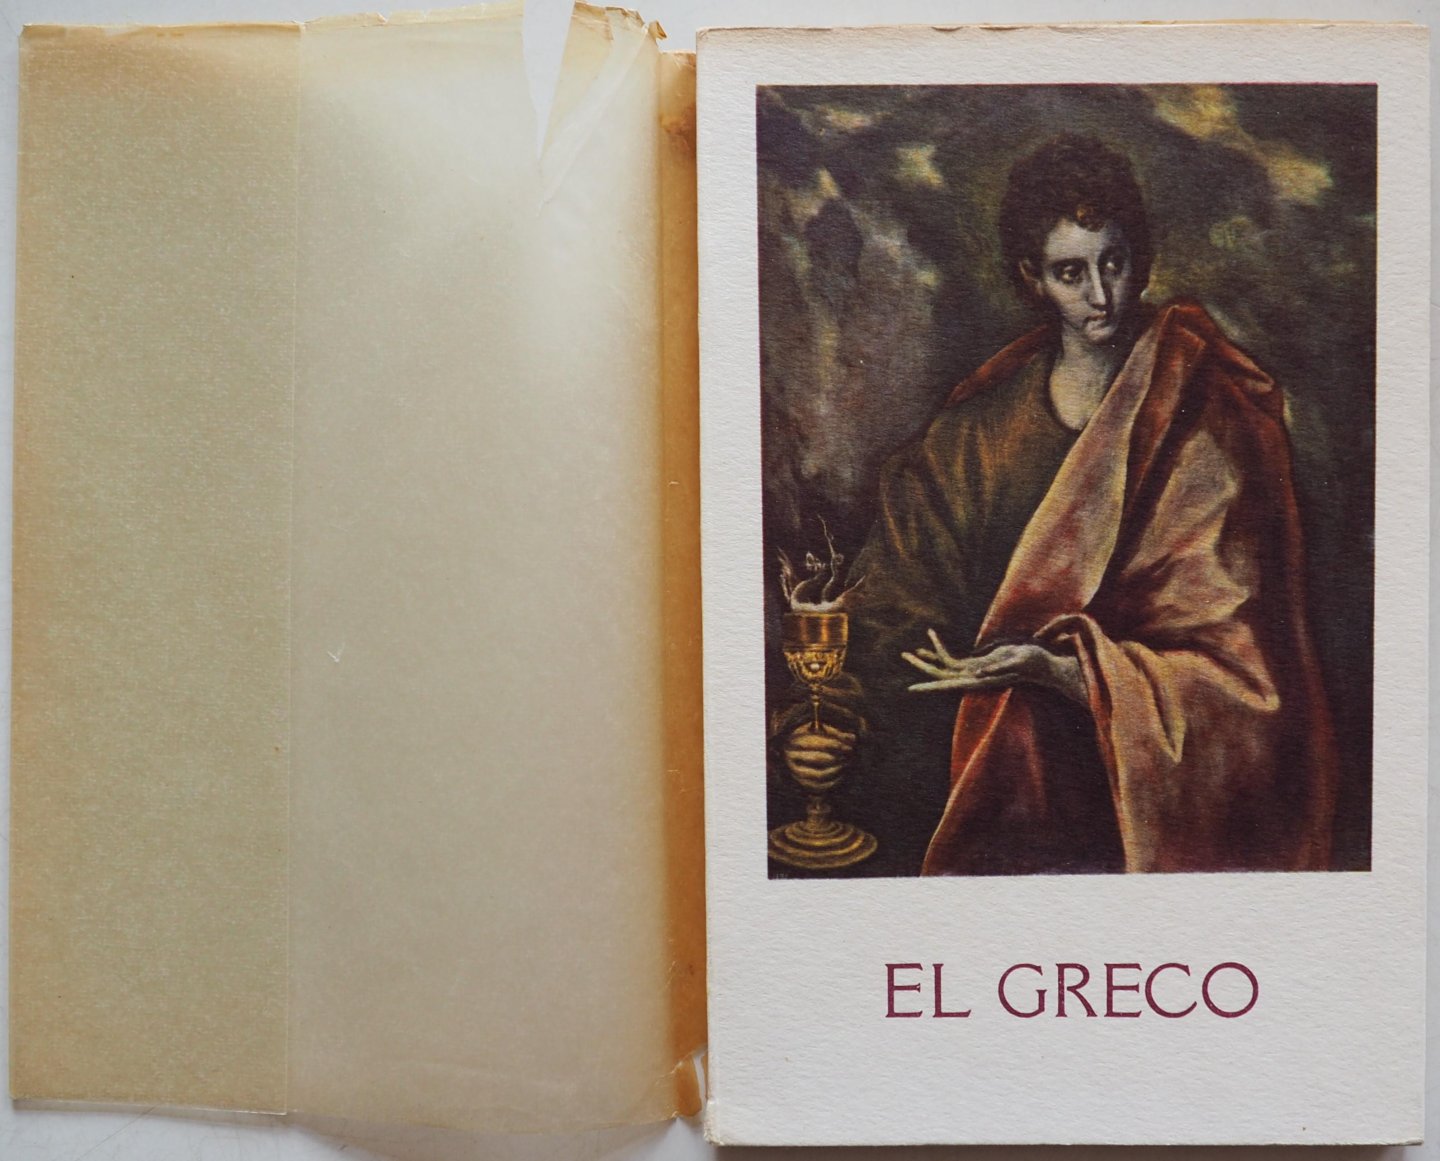 Vallentin Antonina, ill. Auclair - El Greco (Ce Vingt et unieme Volume de la Bibliotheque Aldine des Arts 8 pp tekst 20 pp platen 7 pp notices)